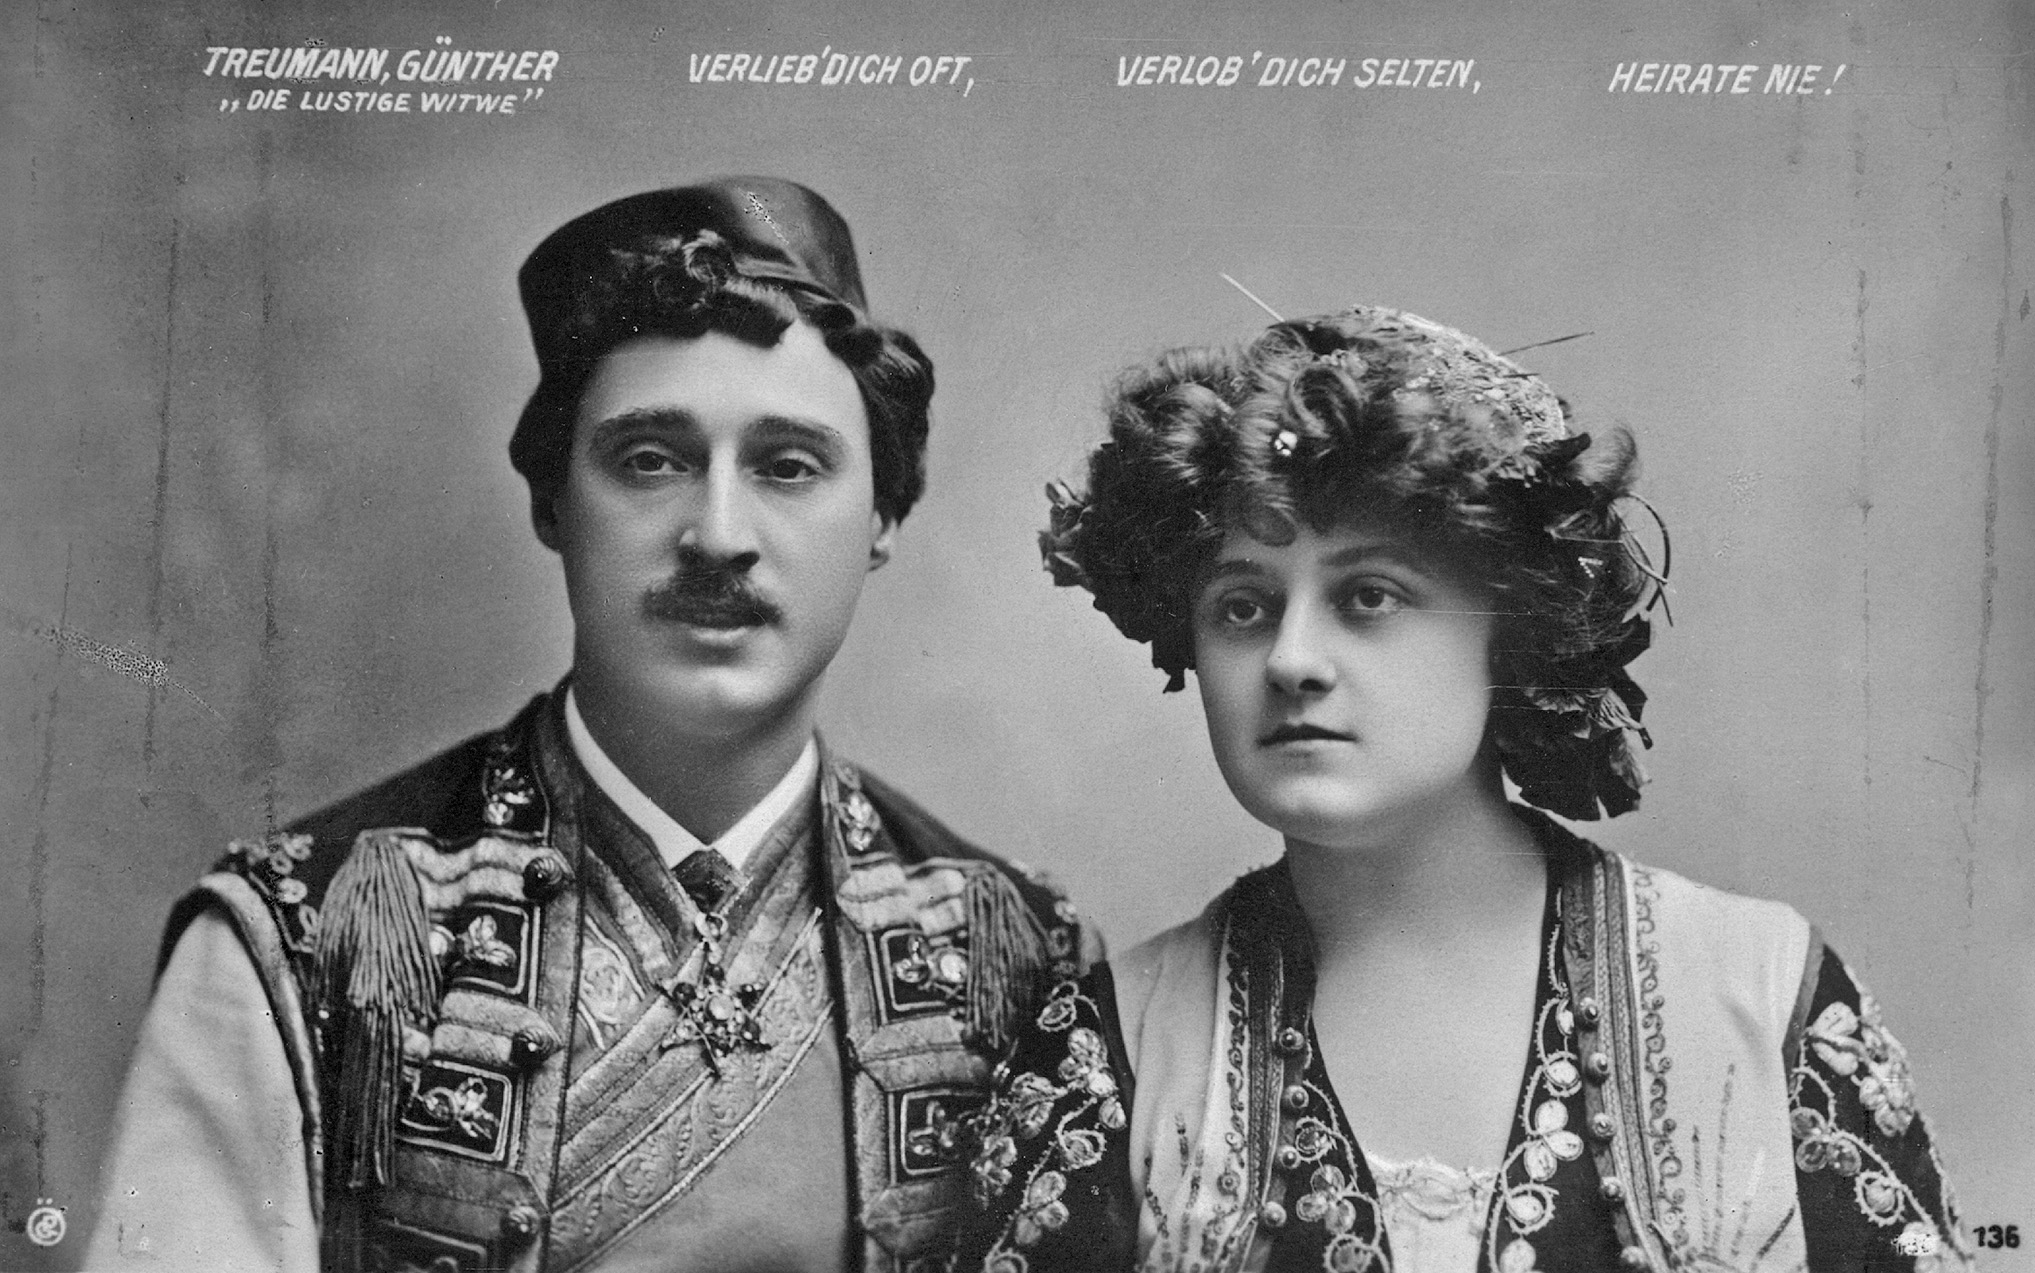 The original Viennese starts of "Die lustige Witwe", Mizzi Günther and Louis Treumann.